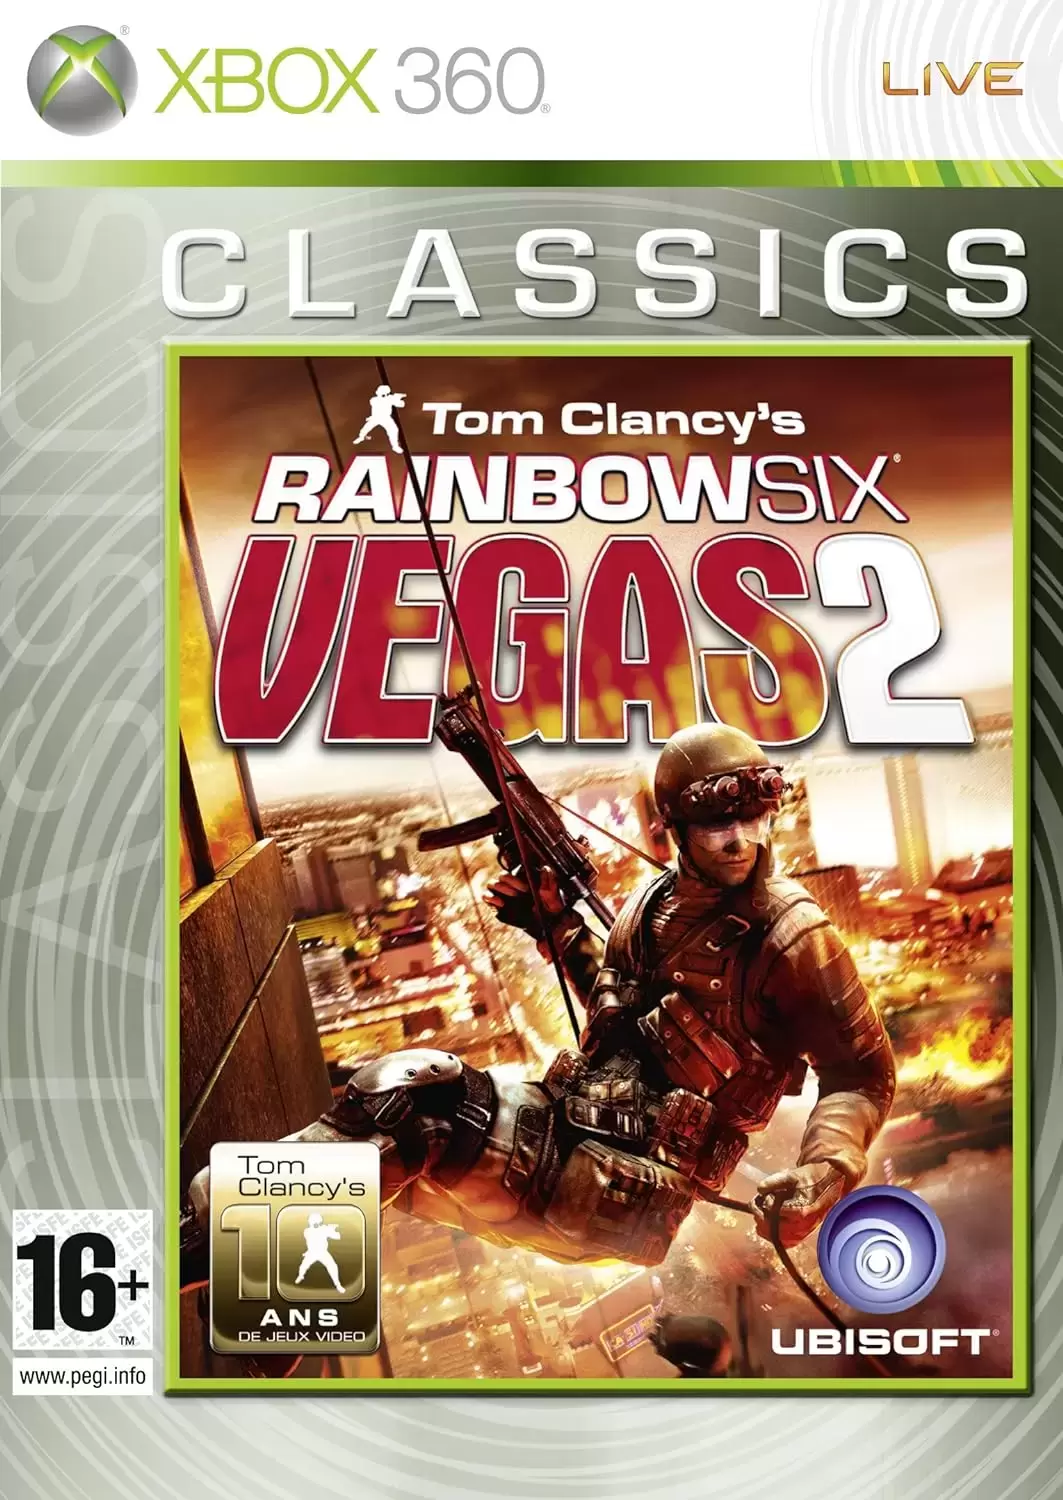 XBOX 360 Games - Rainbow Six: Vegas 2 (Classics)